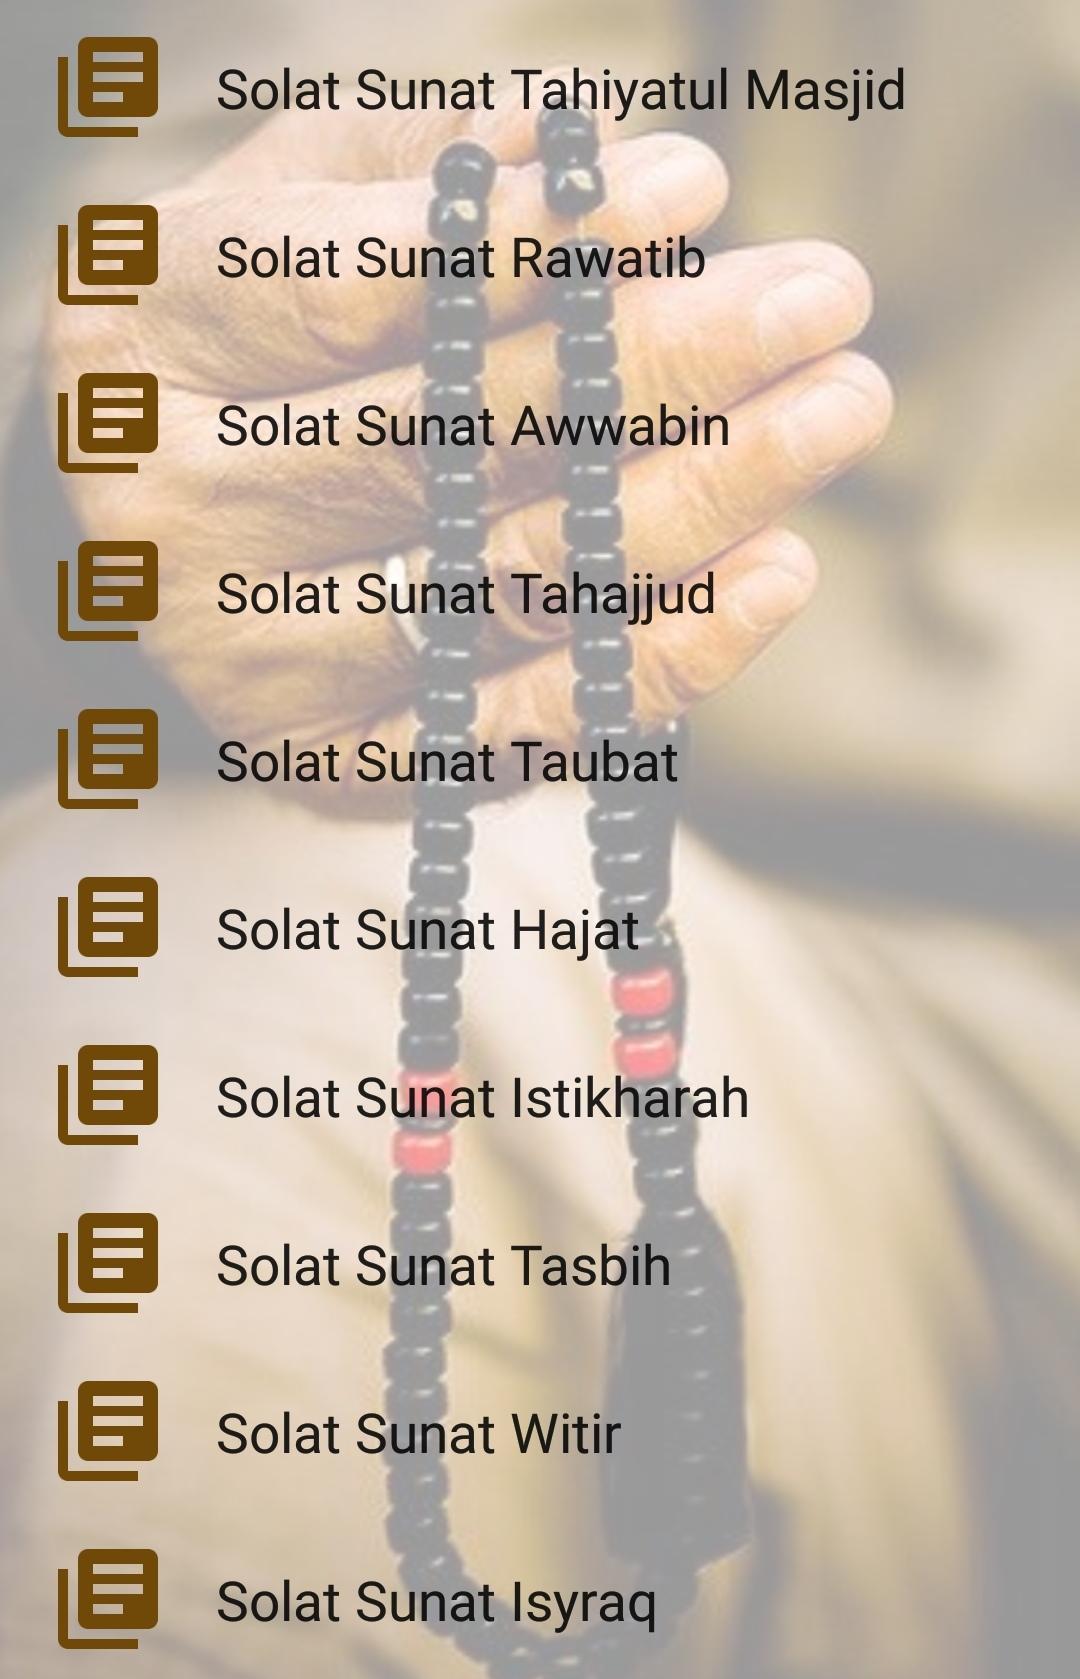 Niat Solat Sunat Tahiyatul Masjid : Logo jabatan hal ehwal agama islam